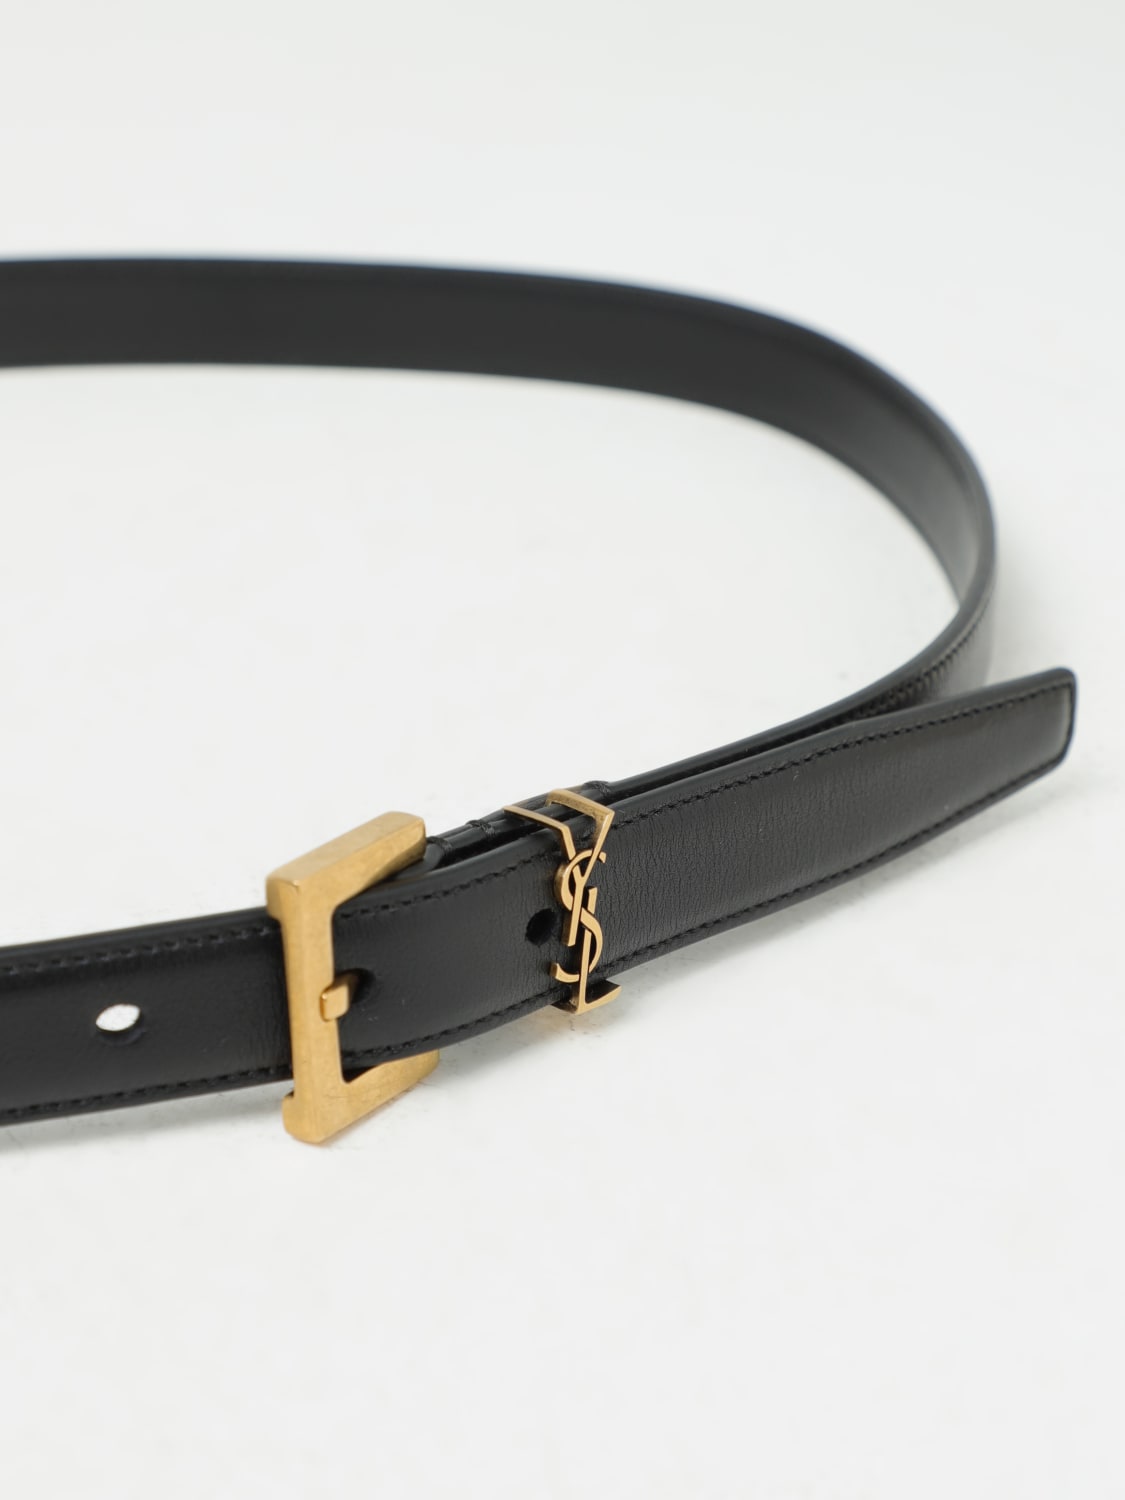 Saint Laurent Women's Monogram Leather Belt